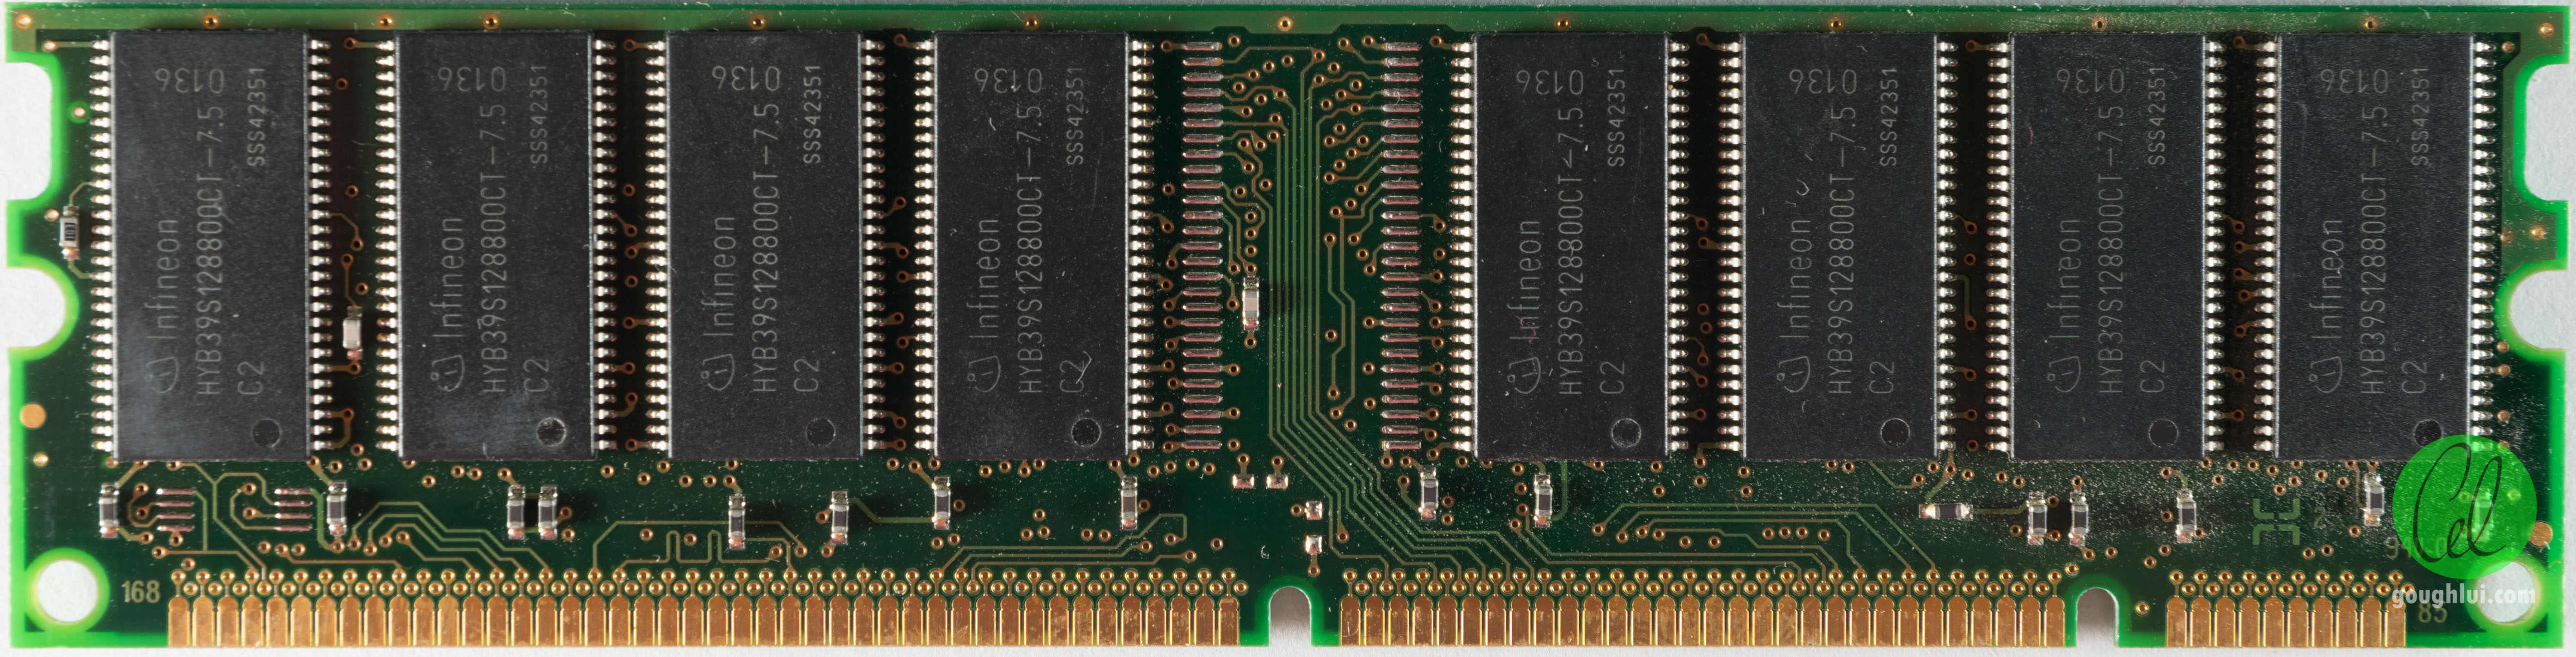 Samsung sdram. Stm32 SDRAM PCB. SDRAM 64mb. SDRAM схема. Тип: SDRAM , компания Micron, объём 64 МБ..